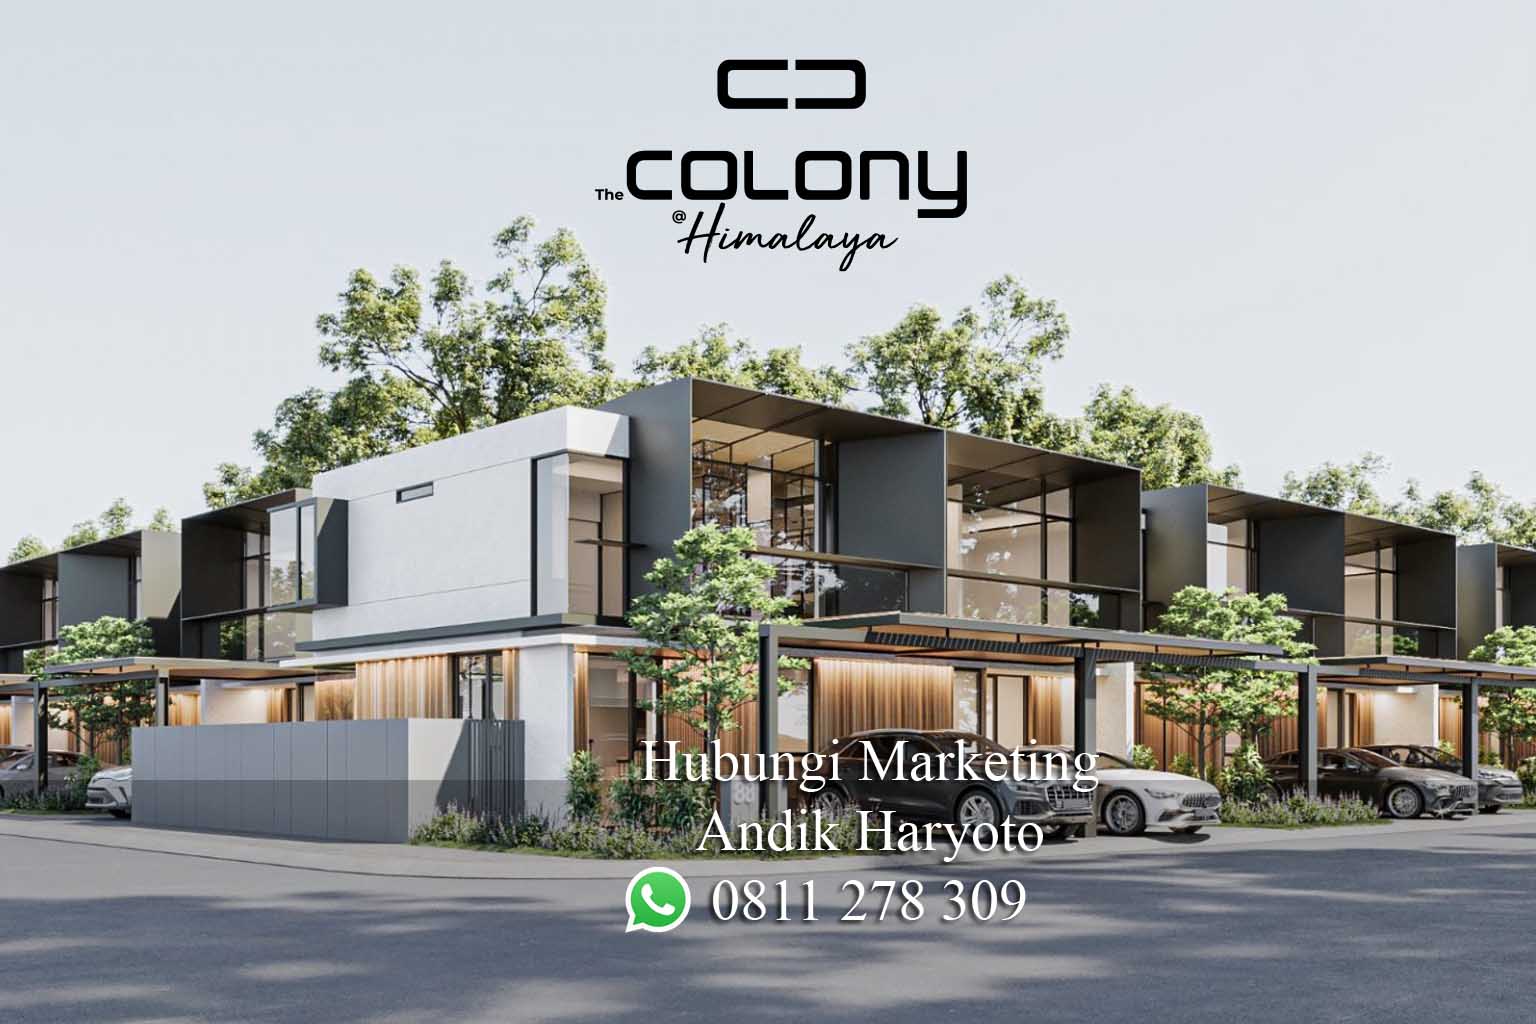 colony himalaya